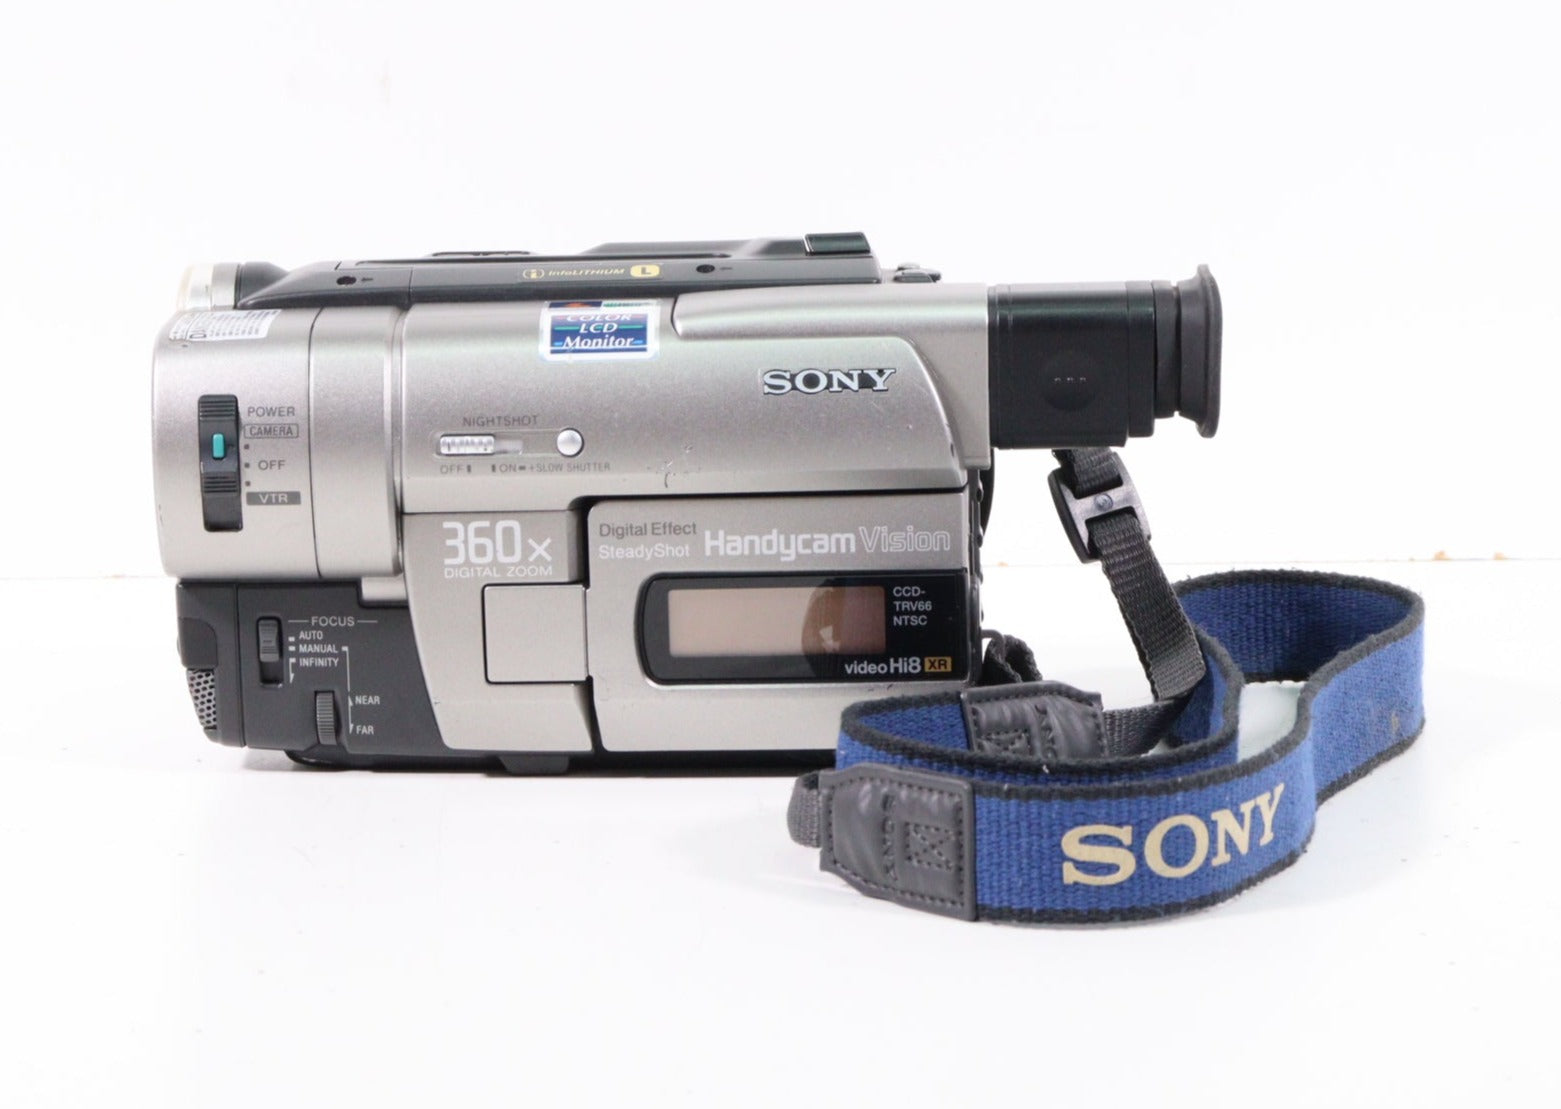 SONY videoHi8 Handycam CCD-TRV66 - ビデオカメラ